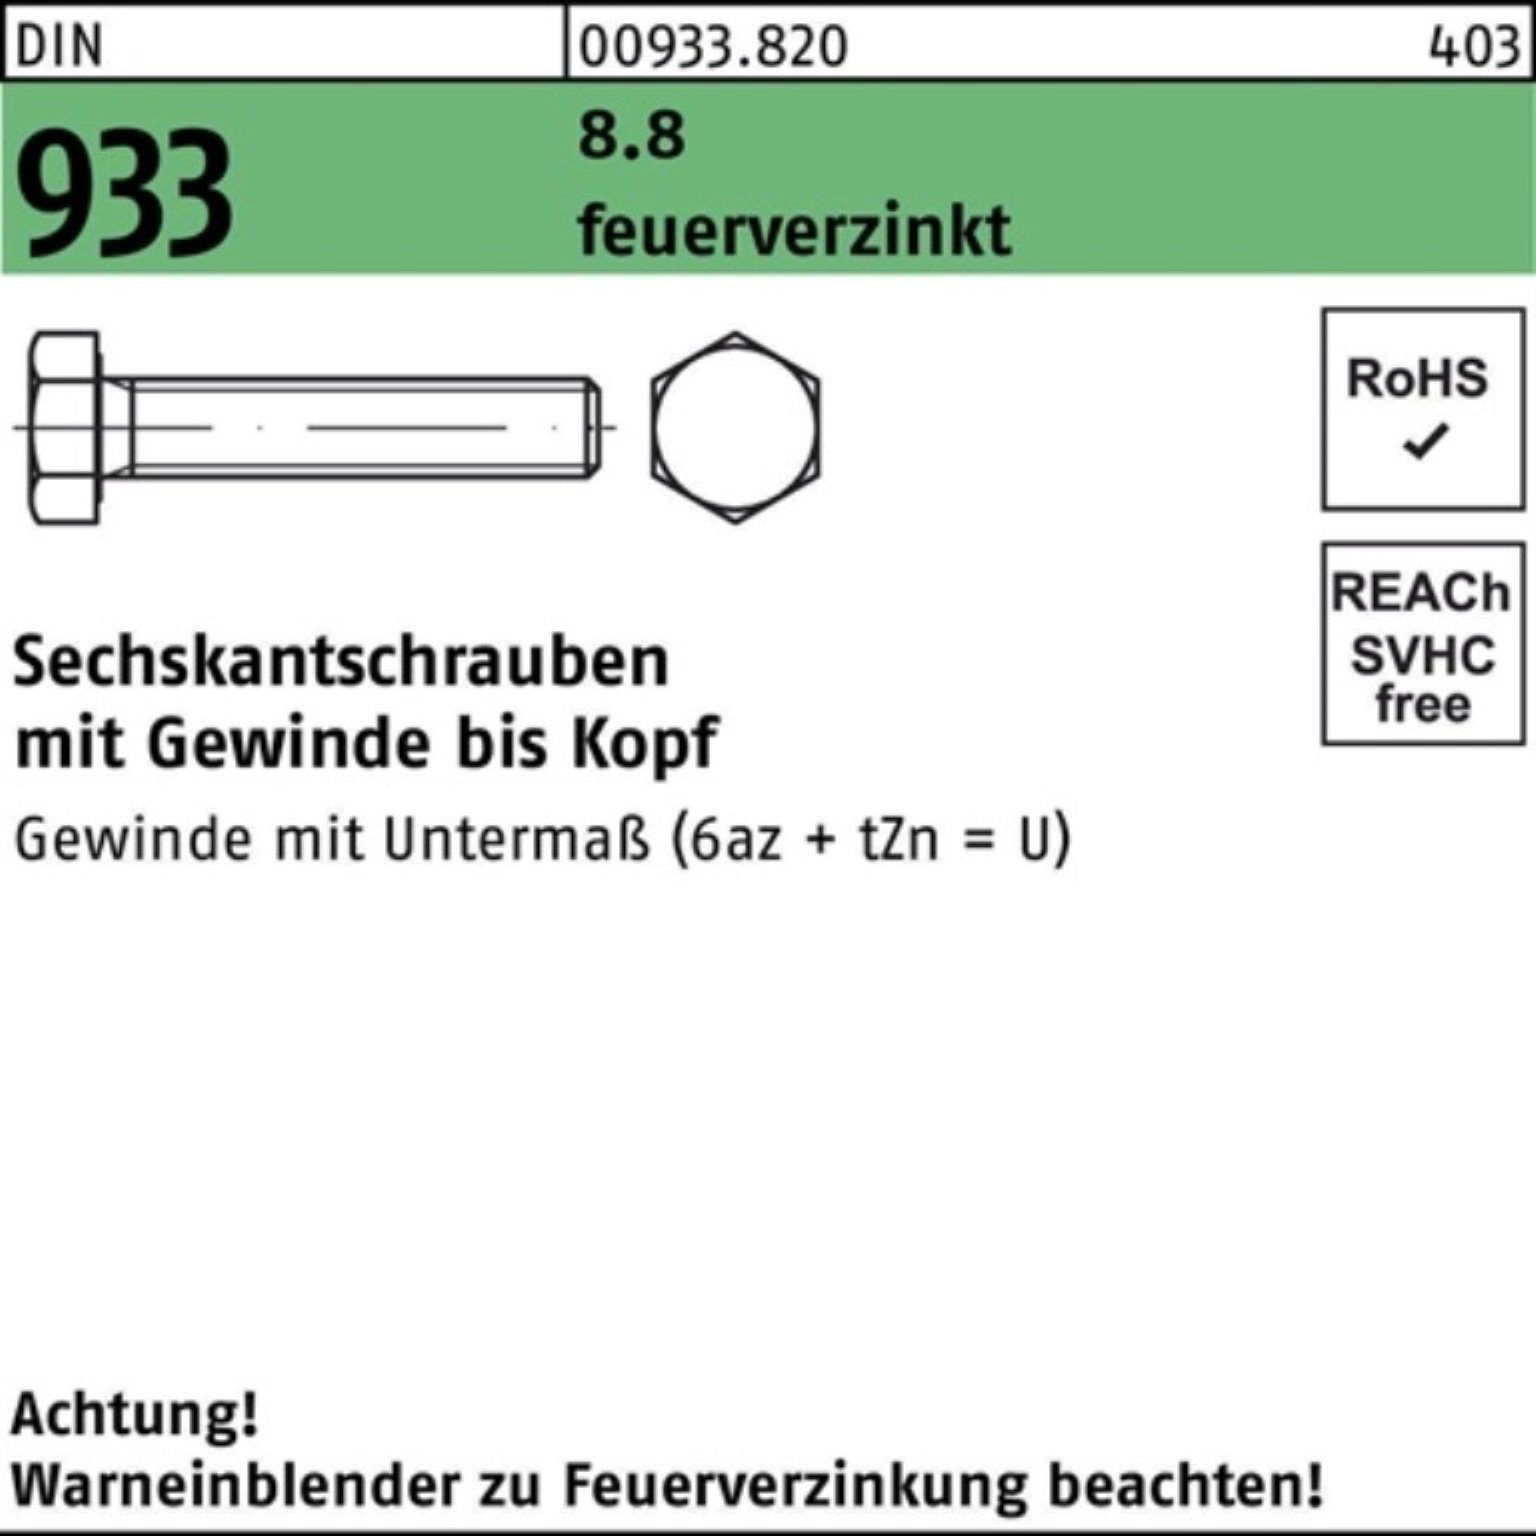 Reyher Sechskantschraube 100er Pack Sechskantschraube feuerverz. Stü 933 8.8 VG DIN 85 M16x 25